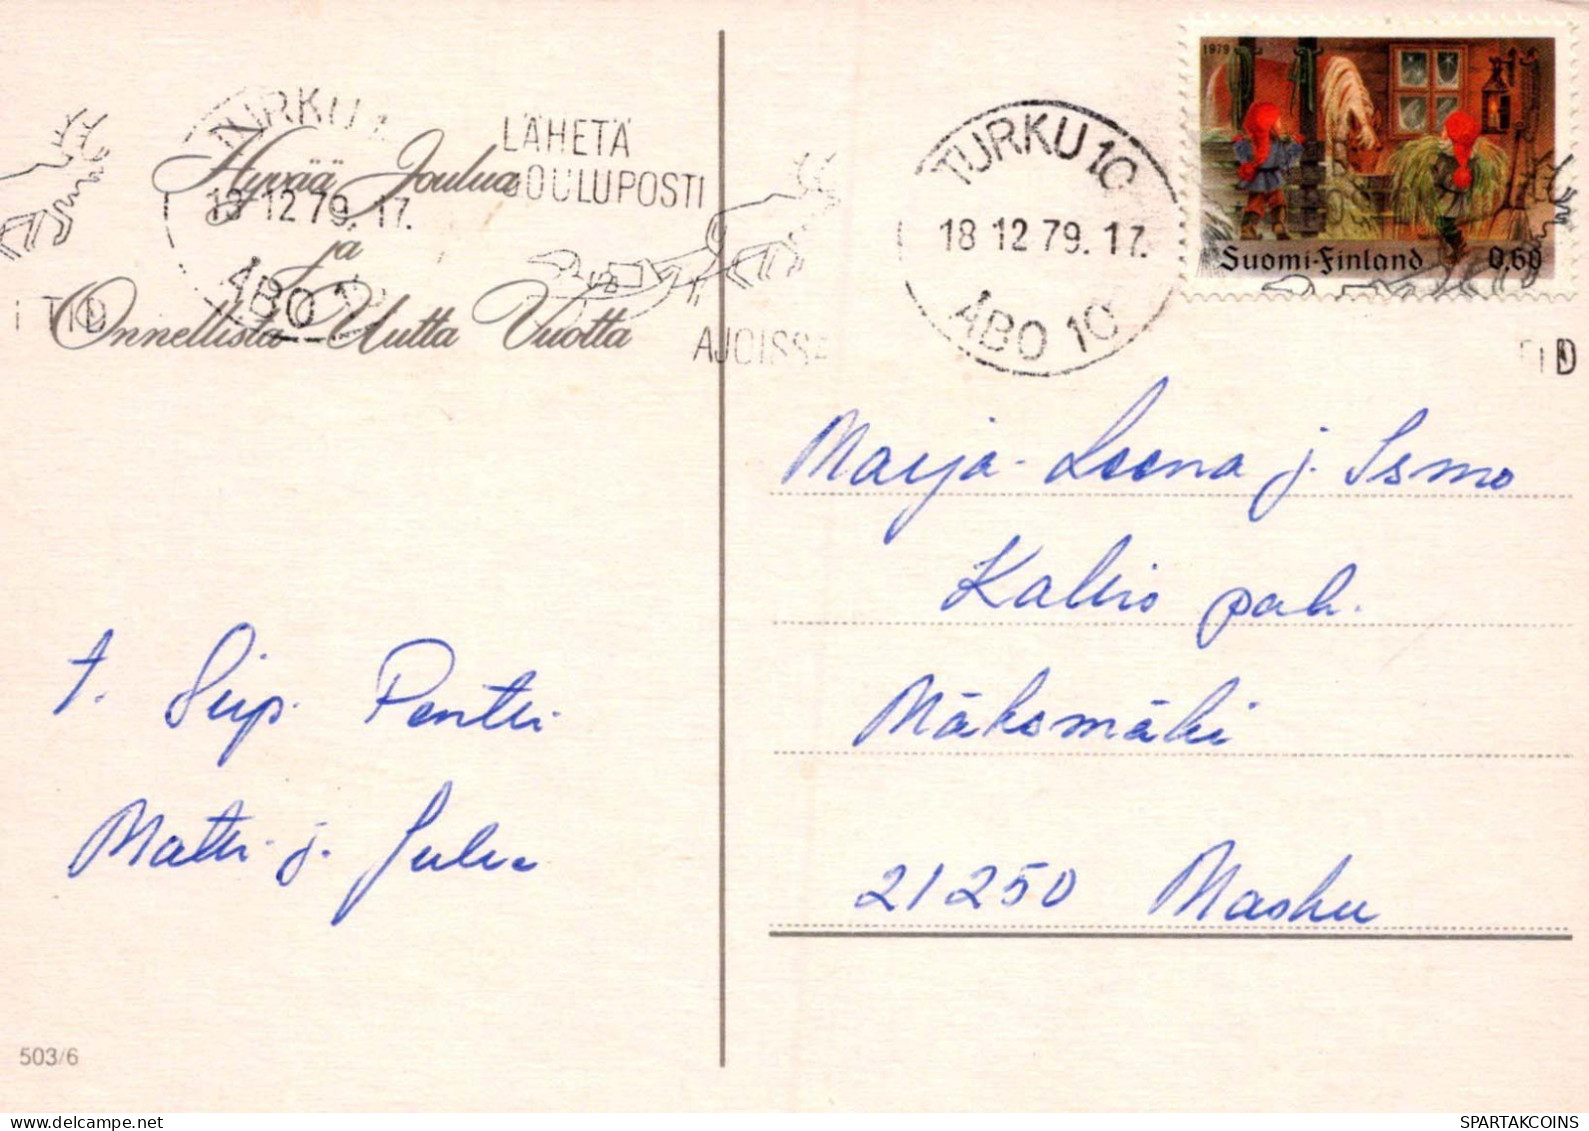 Buon Anno Natale BAMBINO Vintage Cartolina CPSM #PAY016.IT - Año Nuevo